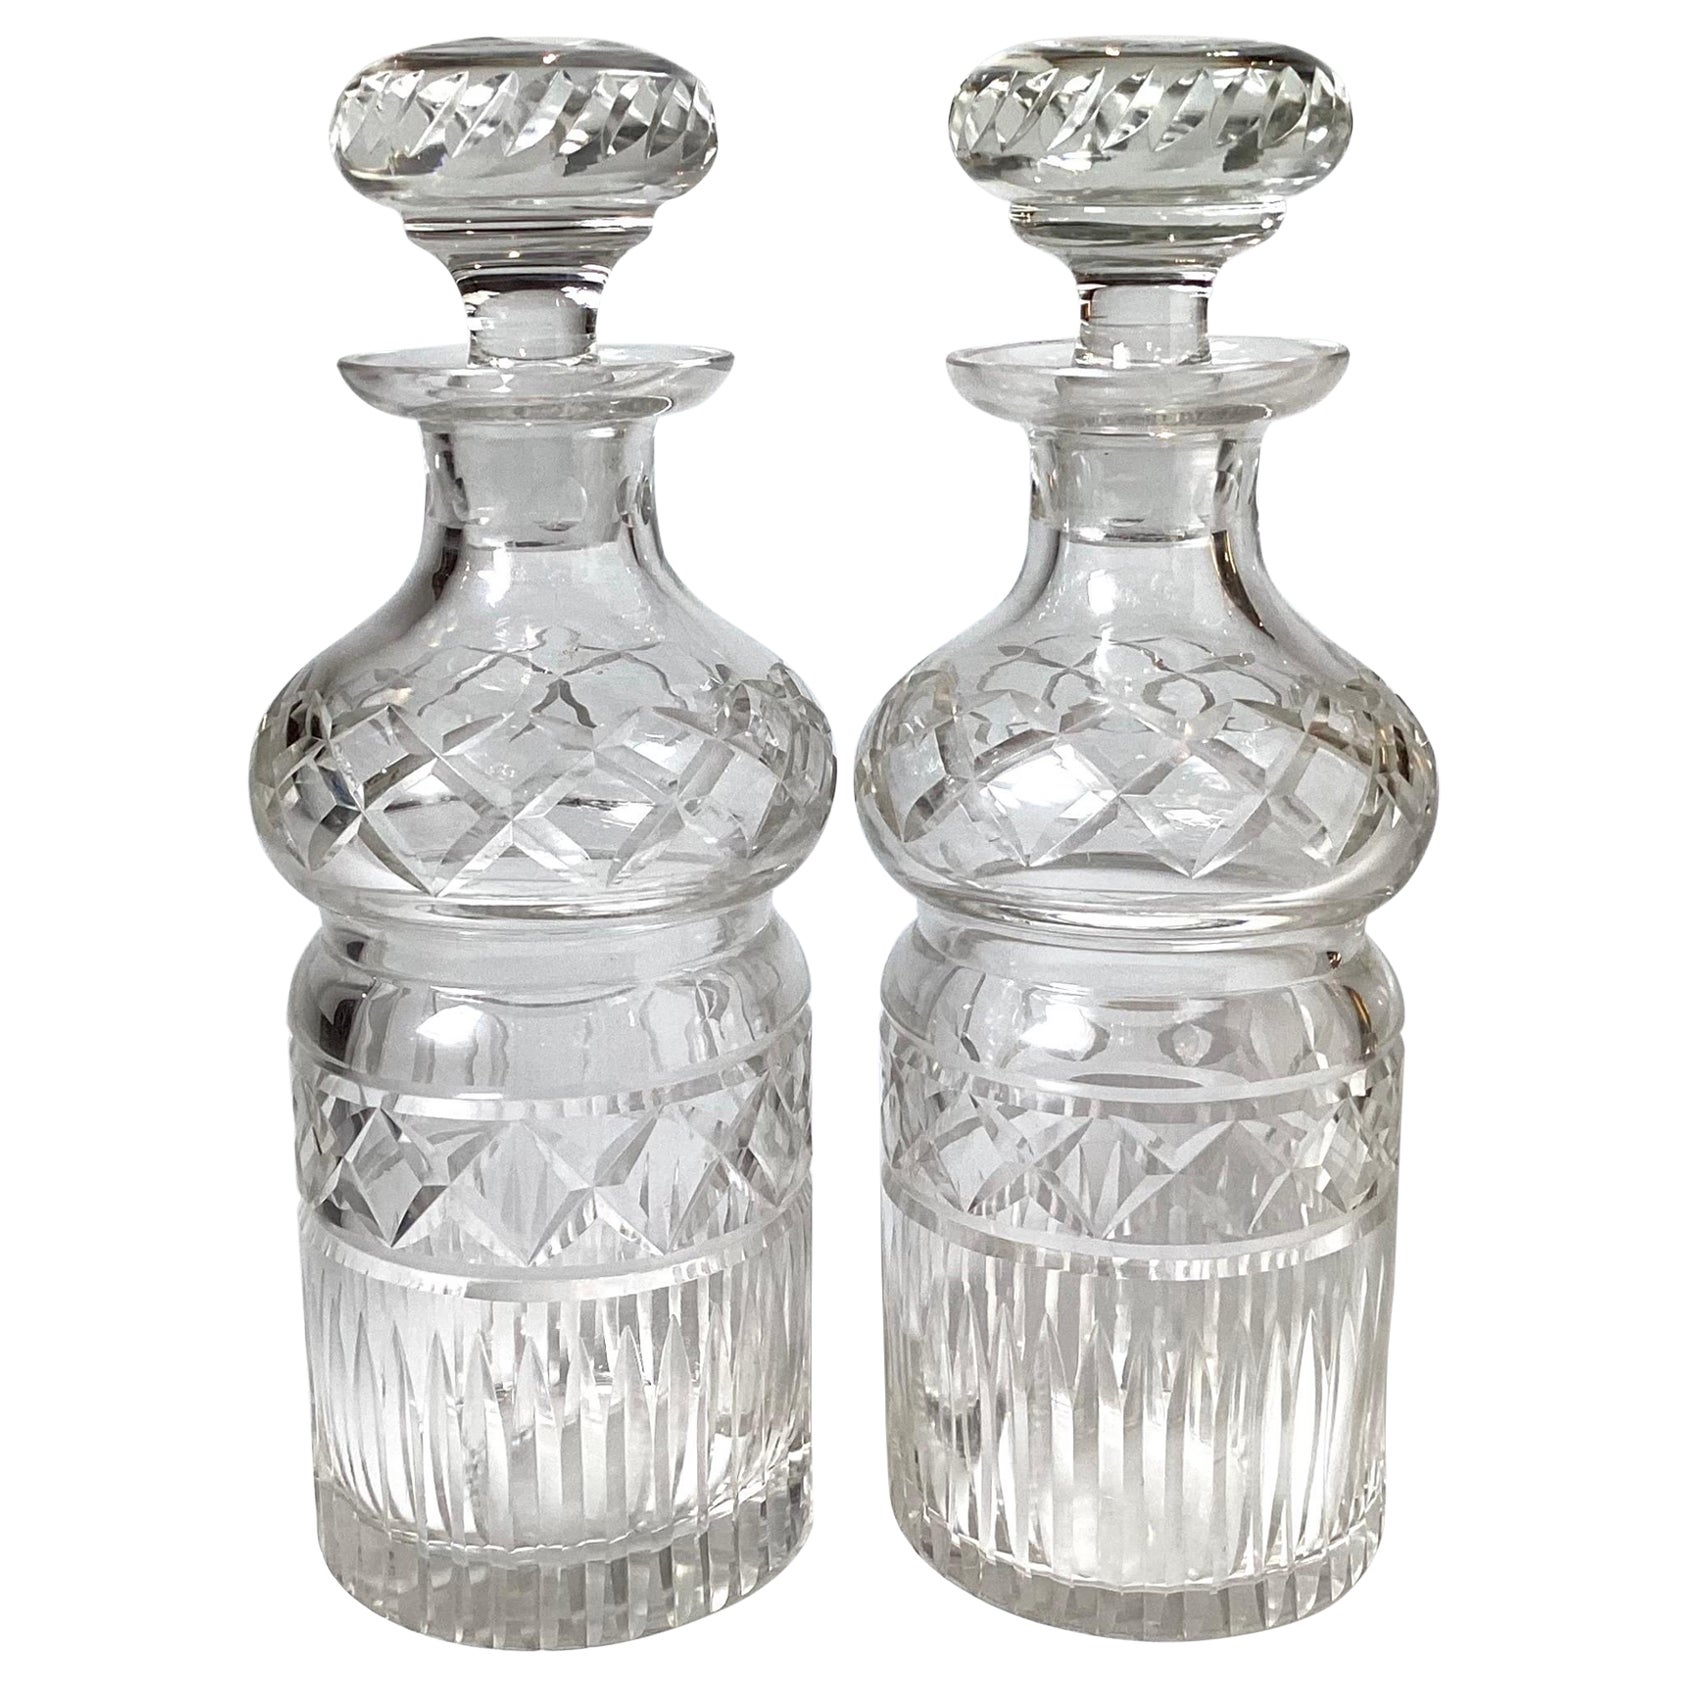 Pait of 19th Century Cut Glass Spirit Decanters